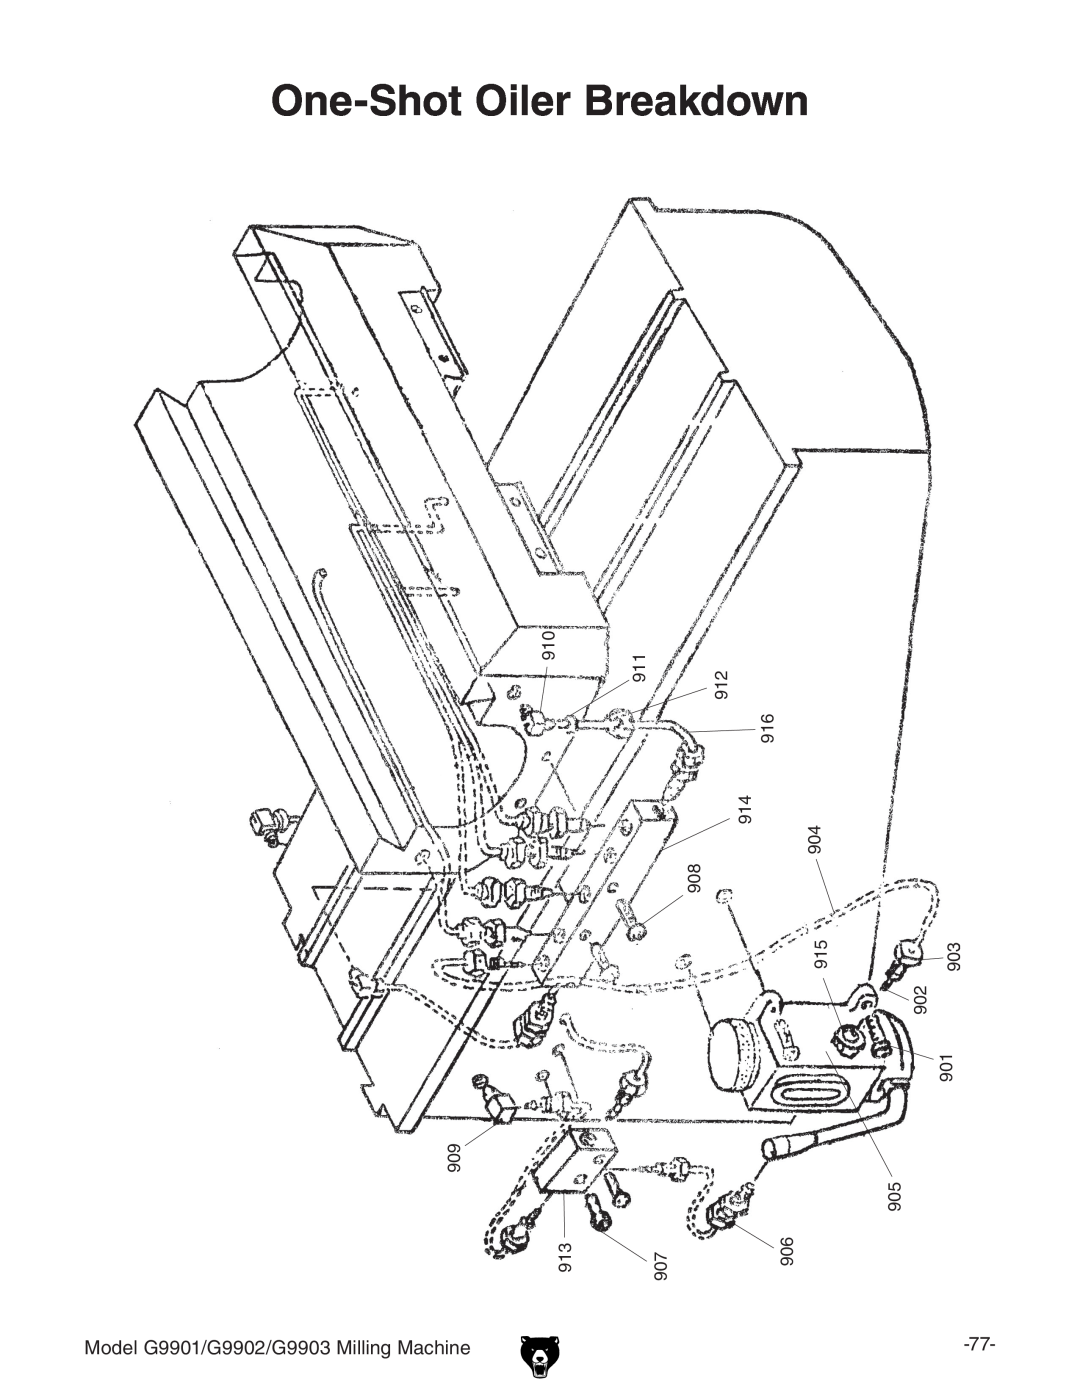 Grizzly manual One-Shot Oiler Breakdown, Model G9901/G9902/G9903 Milling Machine 